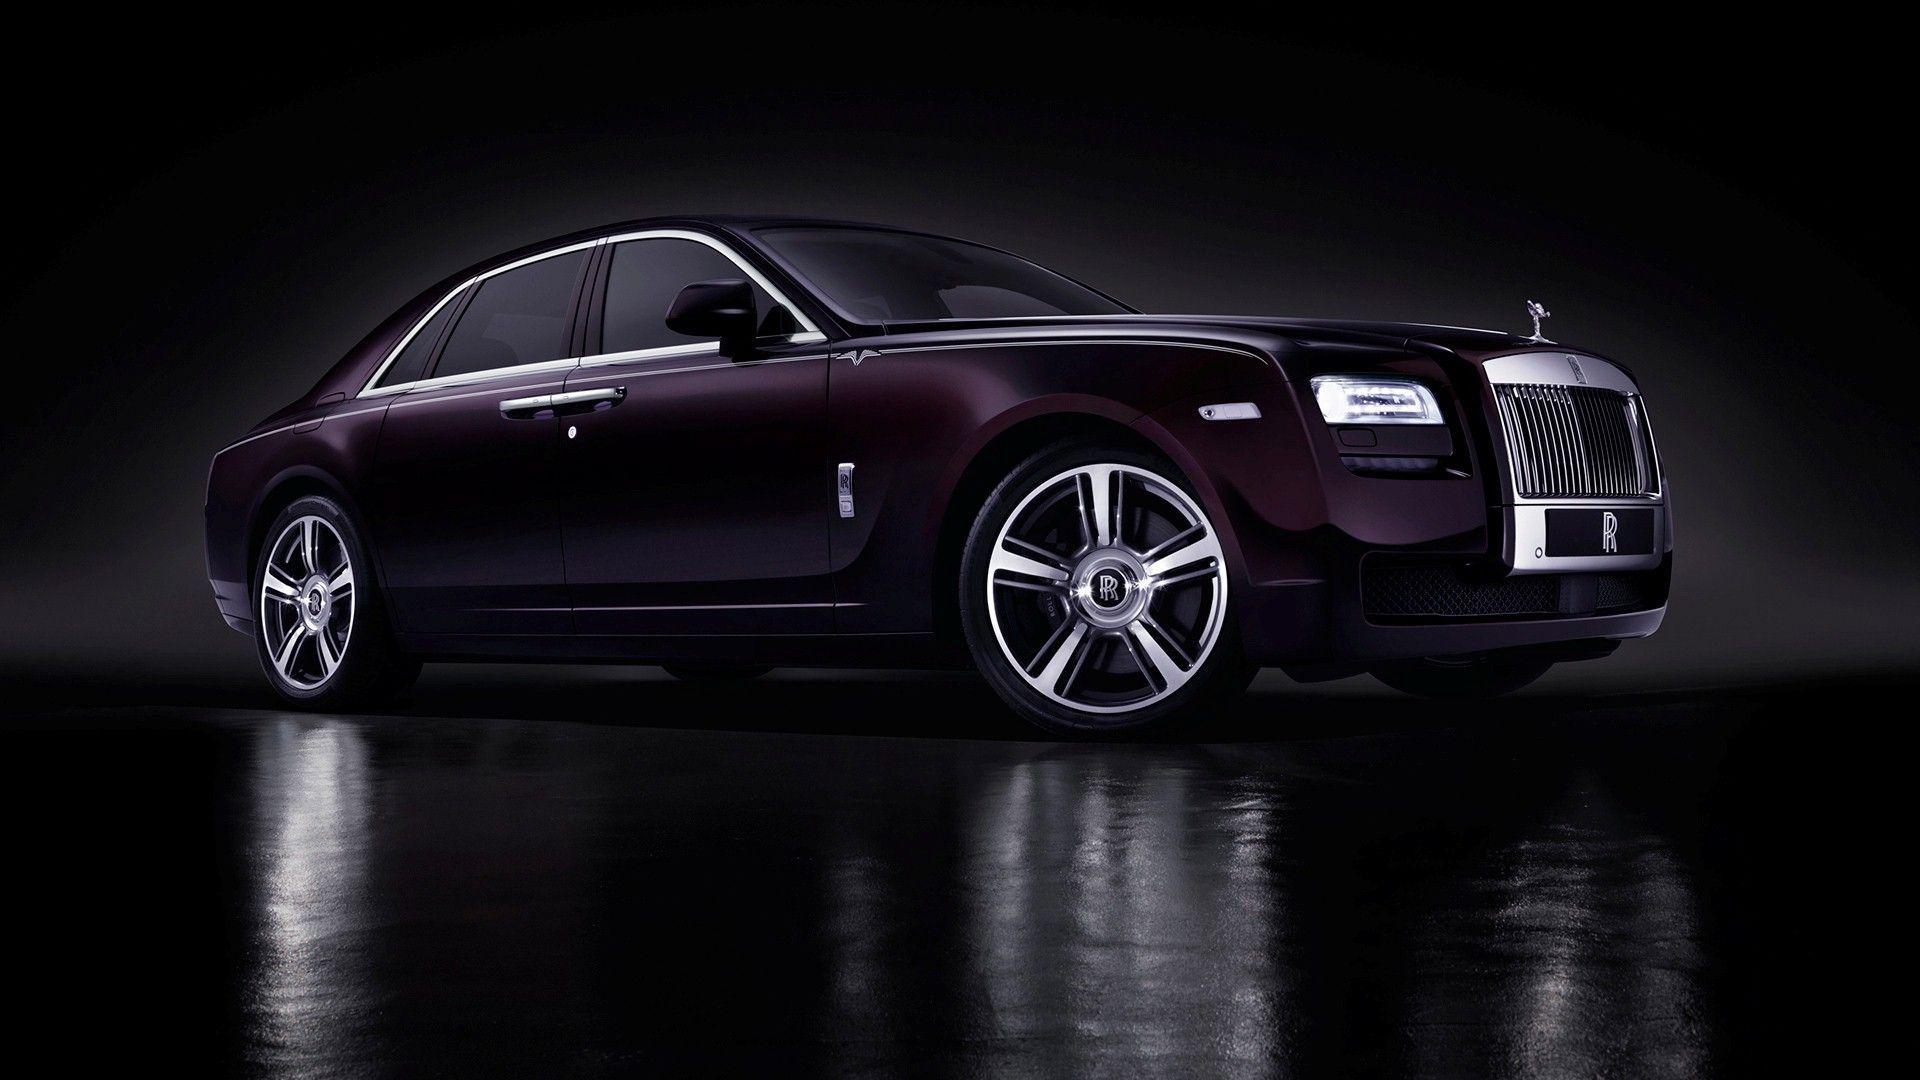 Rolls Royce Cars Wallpaper. Free Download HD Latest Motors Image